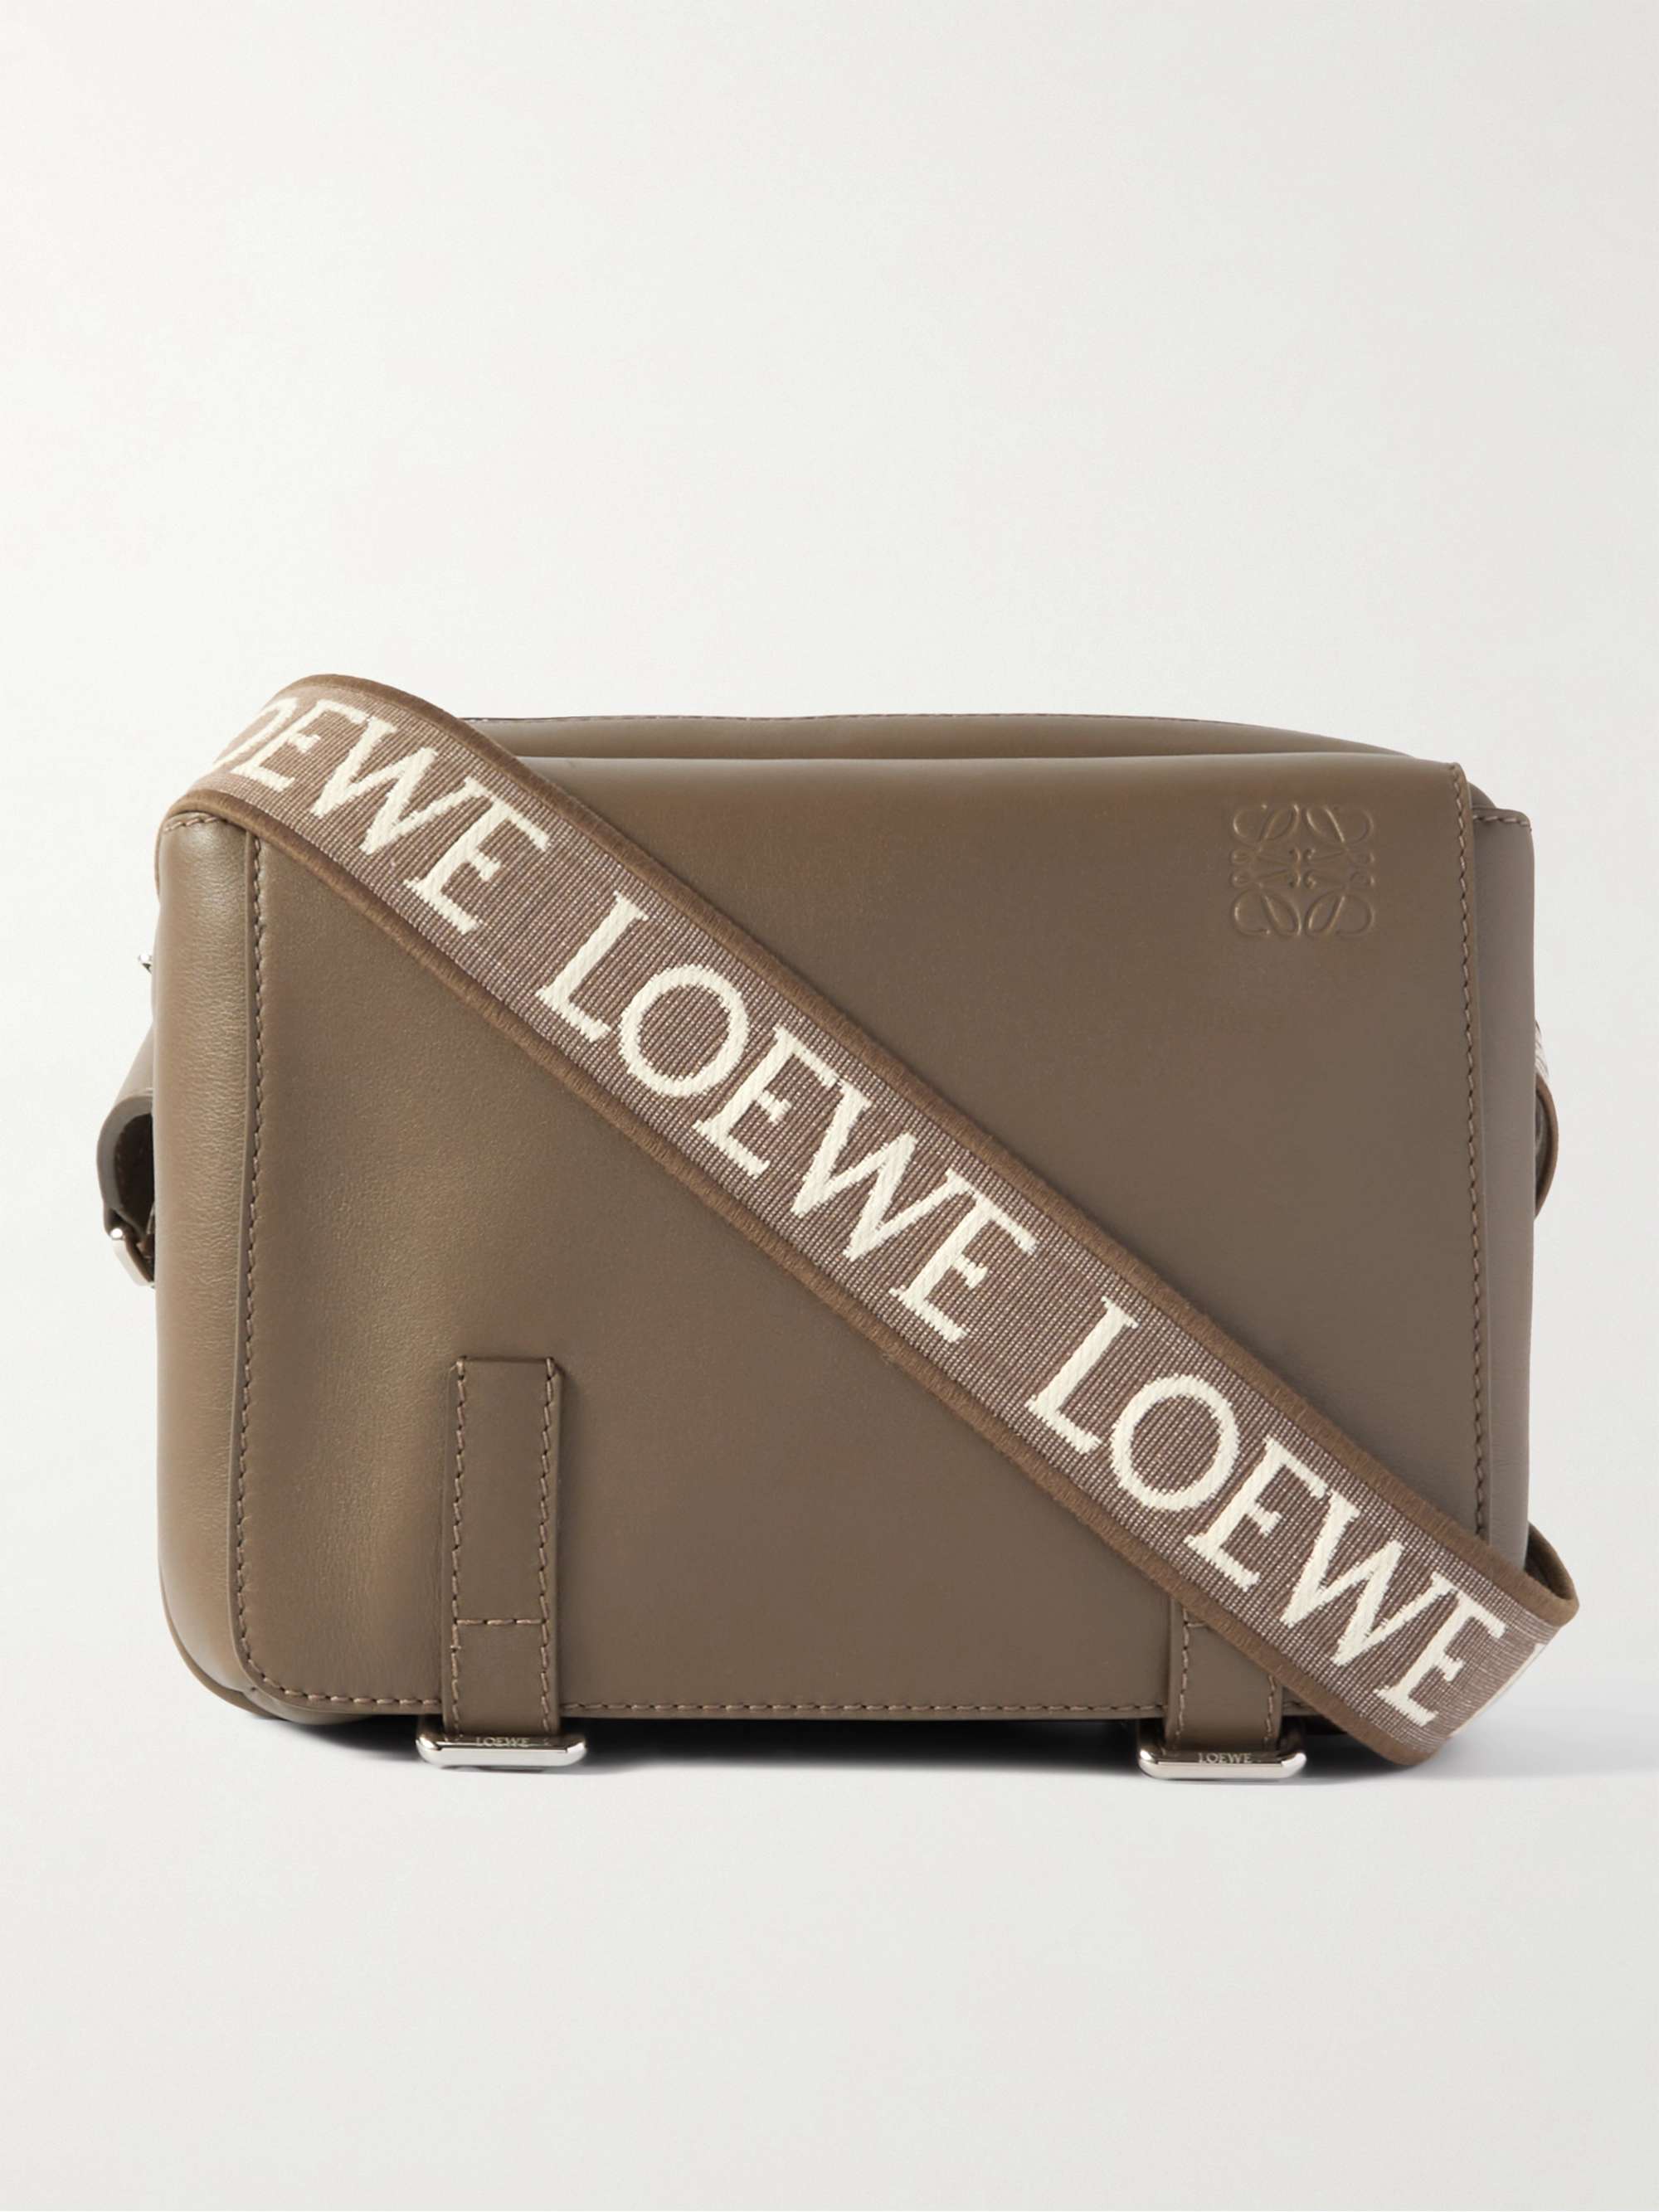 LOEWE Military Leather Messenger Bag for Men | MR PORTER